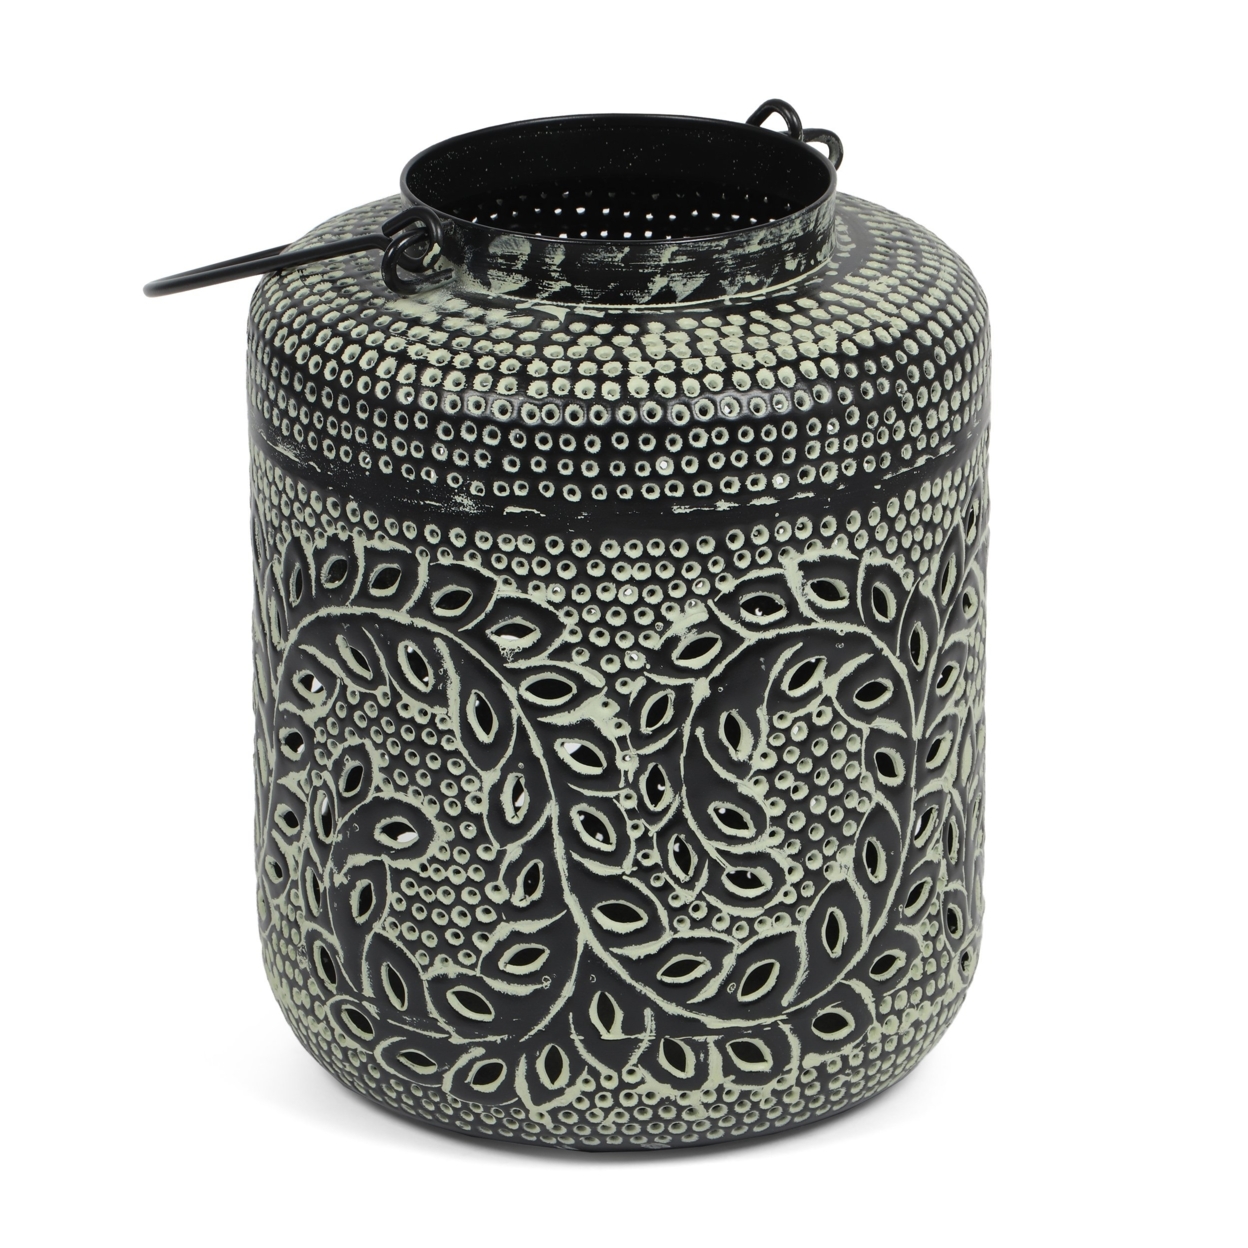 Reitz Boho Handcrafted Decorative Lantern - Small